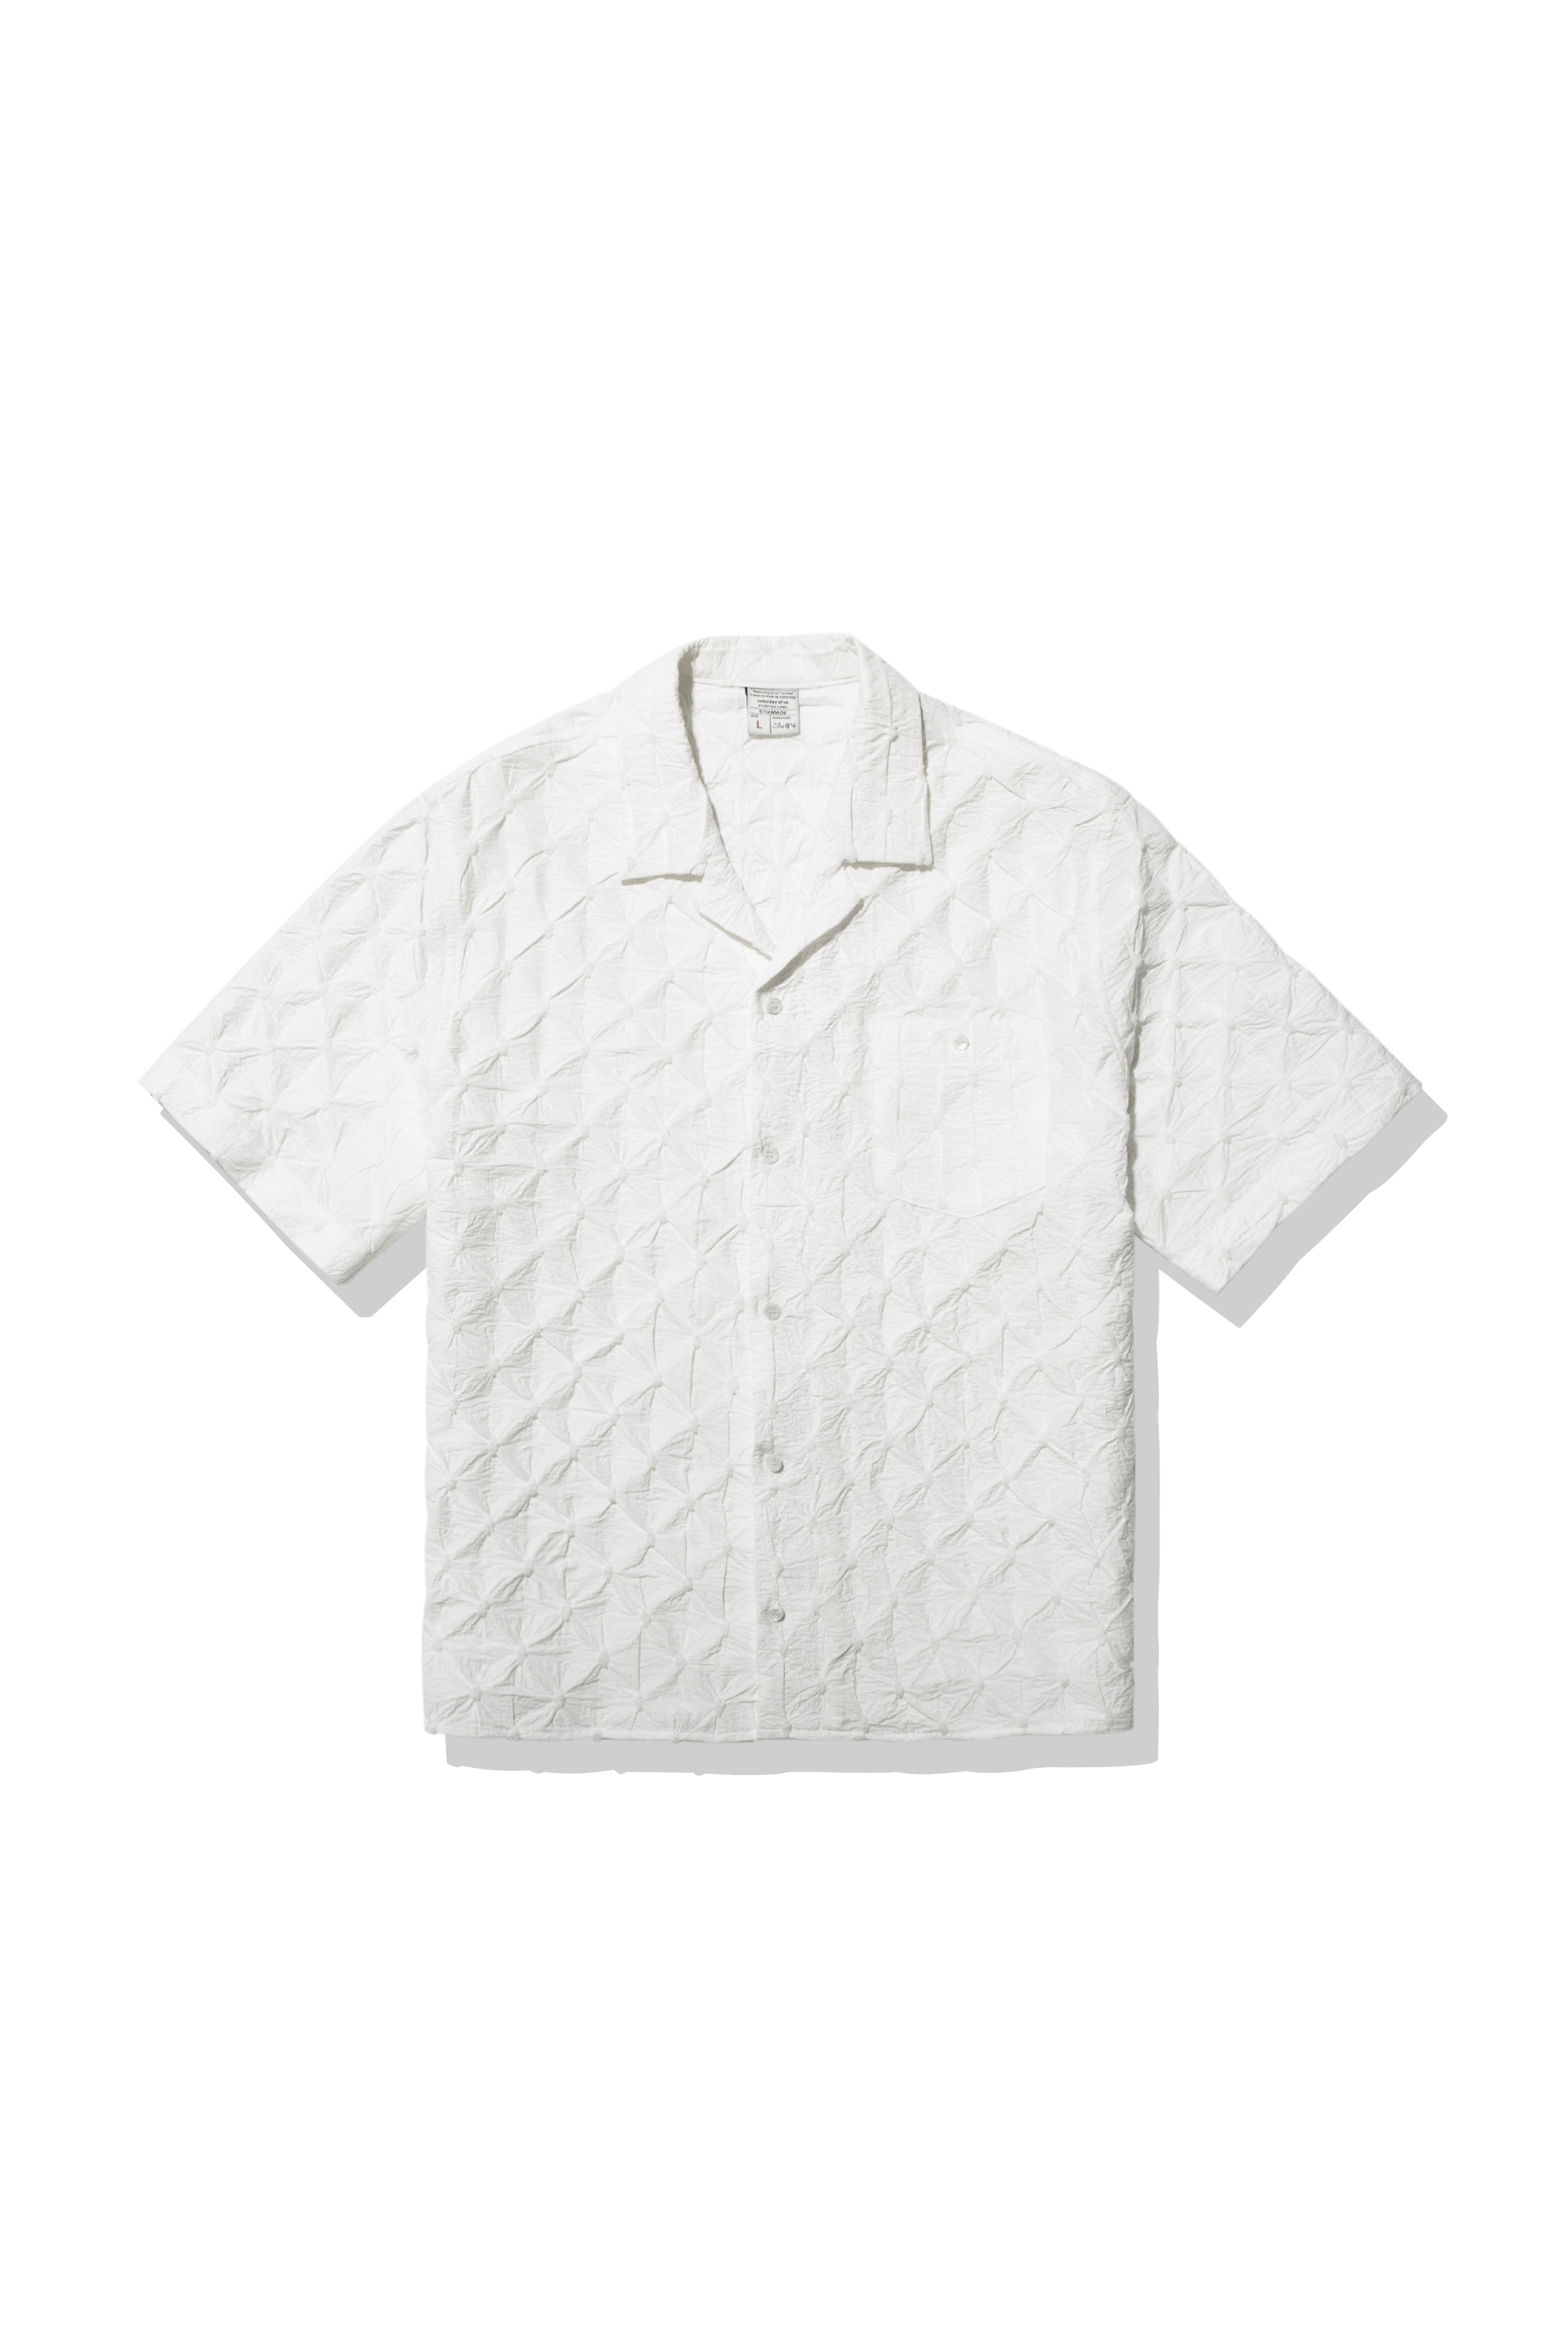 Embroidery Bumpy Shirt White (6월 9일 순차 발송)